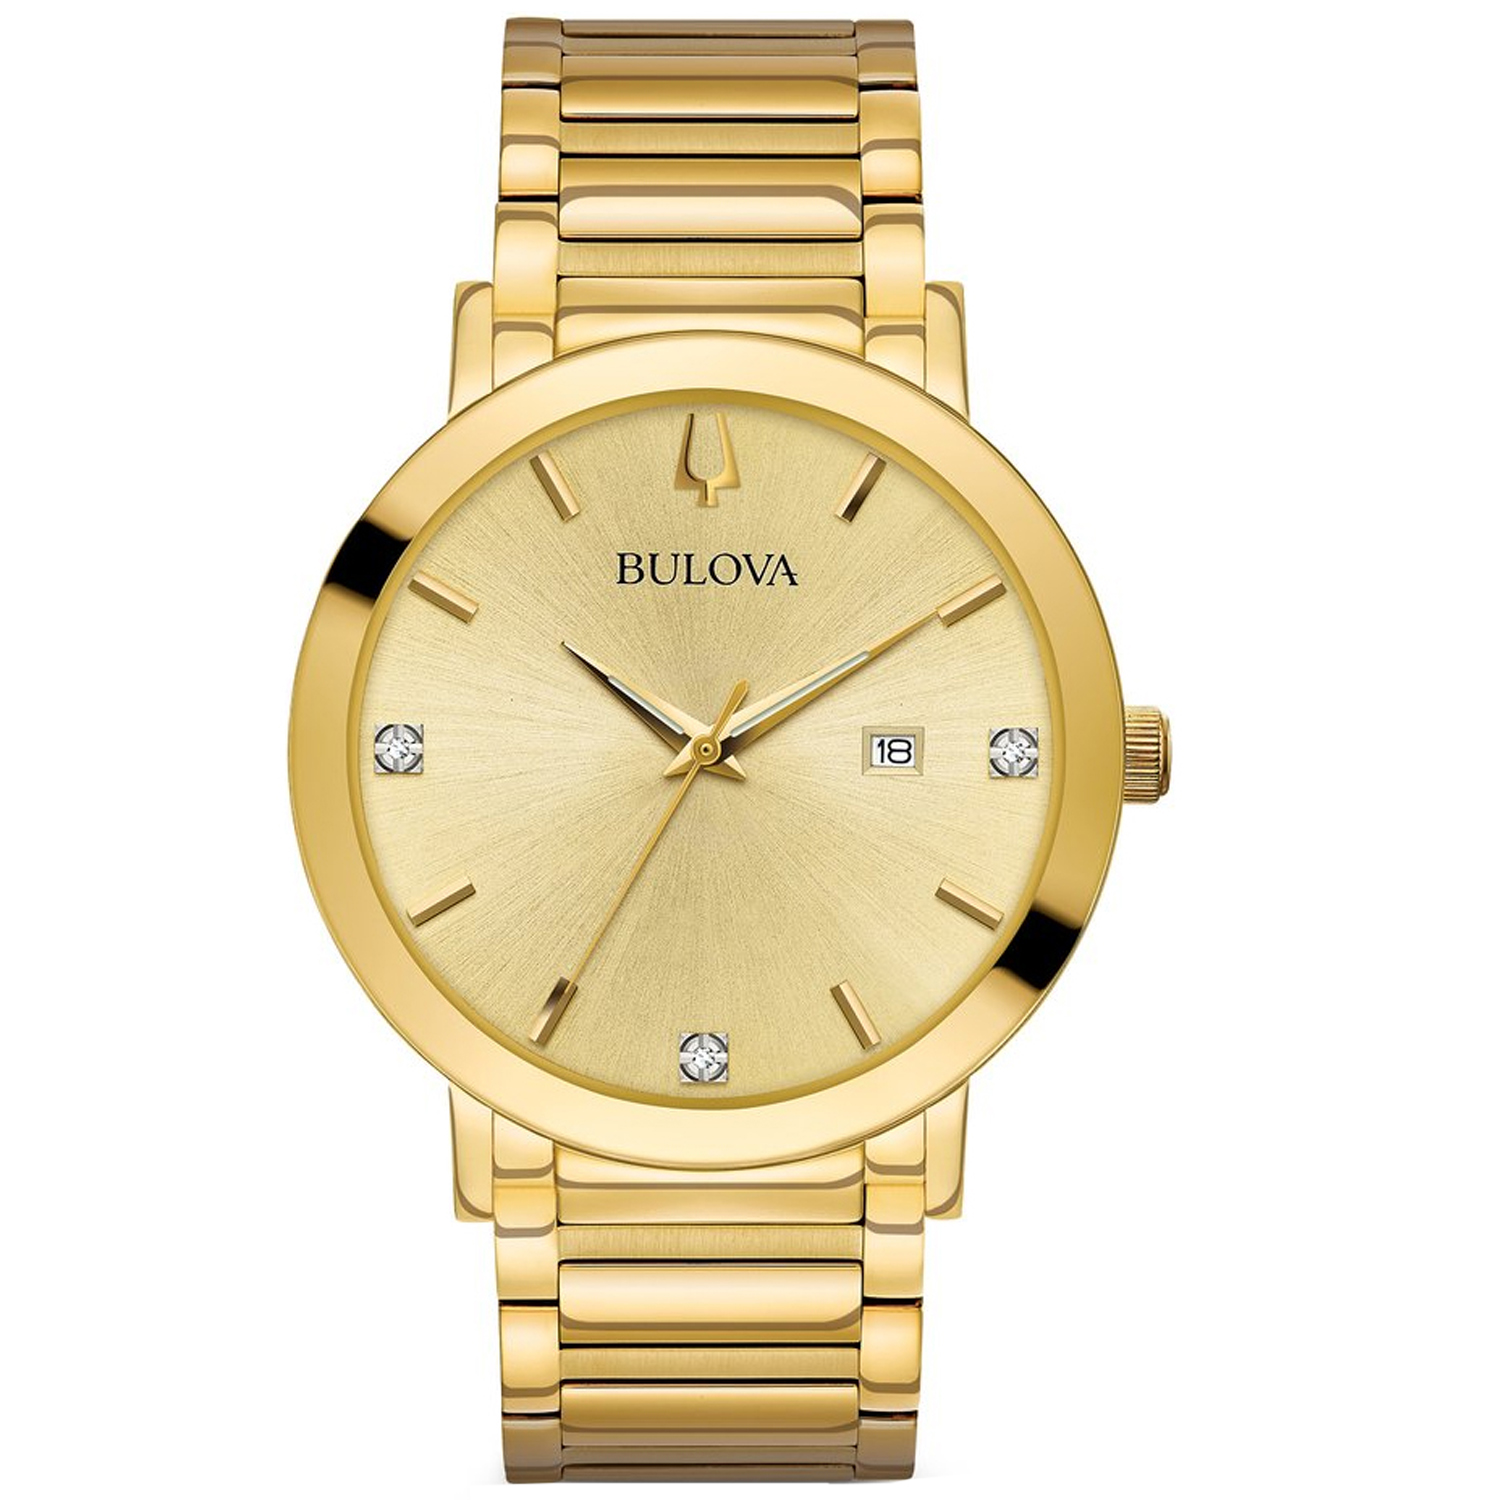 Bulova Modern Gold-Tone Stainless Steel Mens Watch 97D115